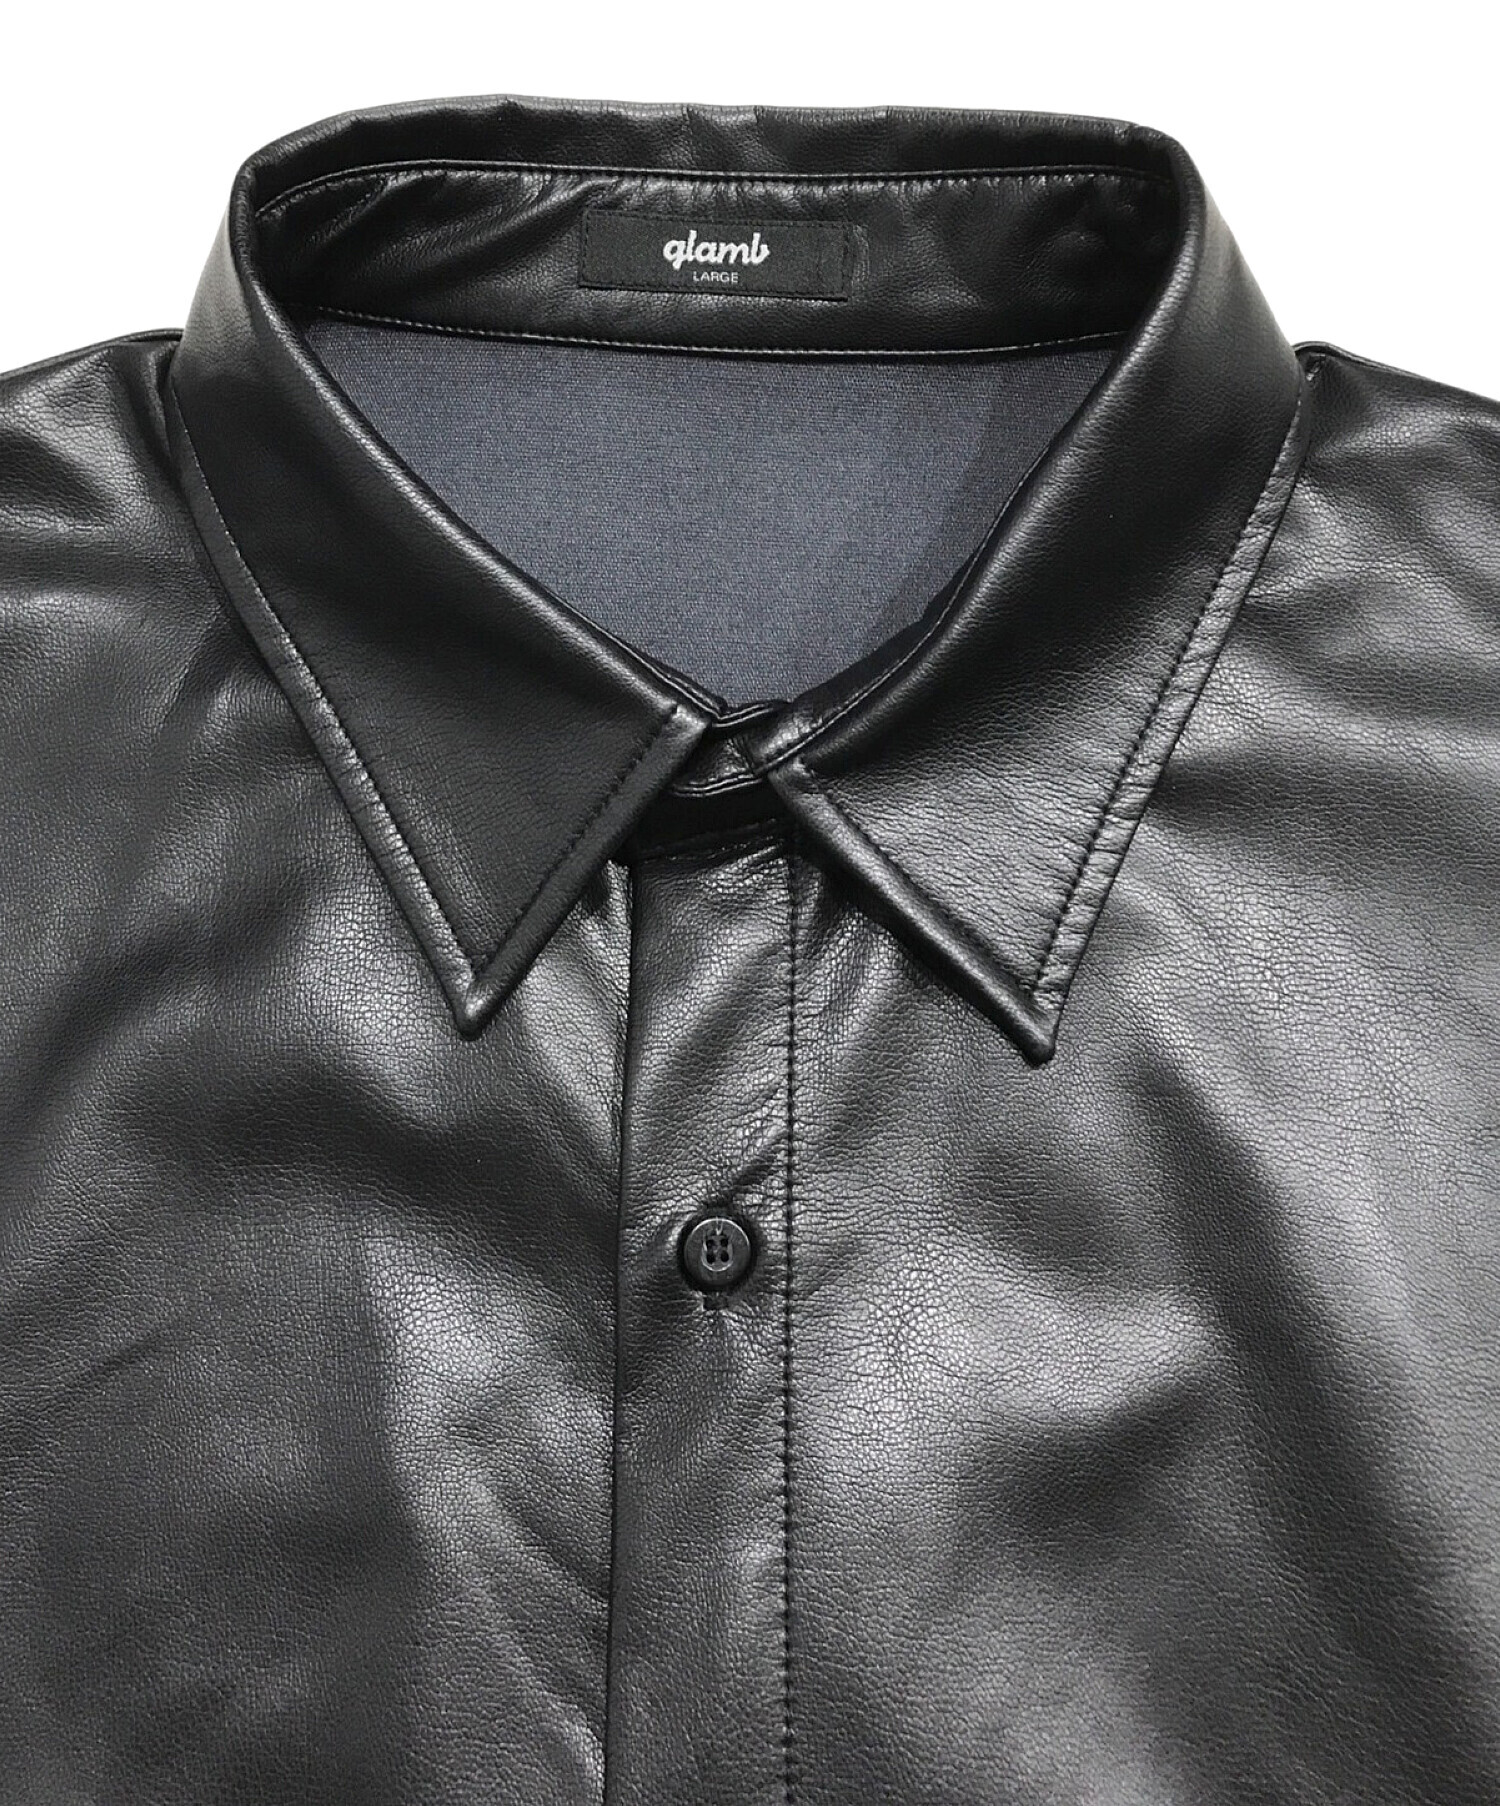 glamb (グラム) ピーユーレザーシャツ ブラック サイズ:L